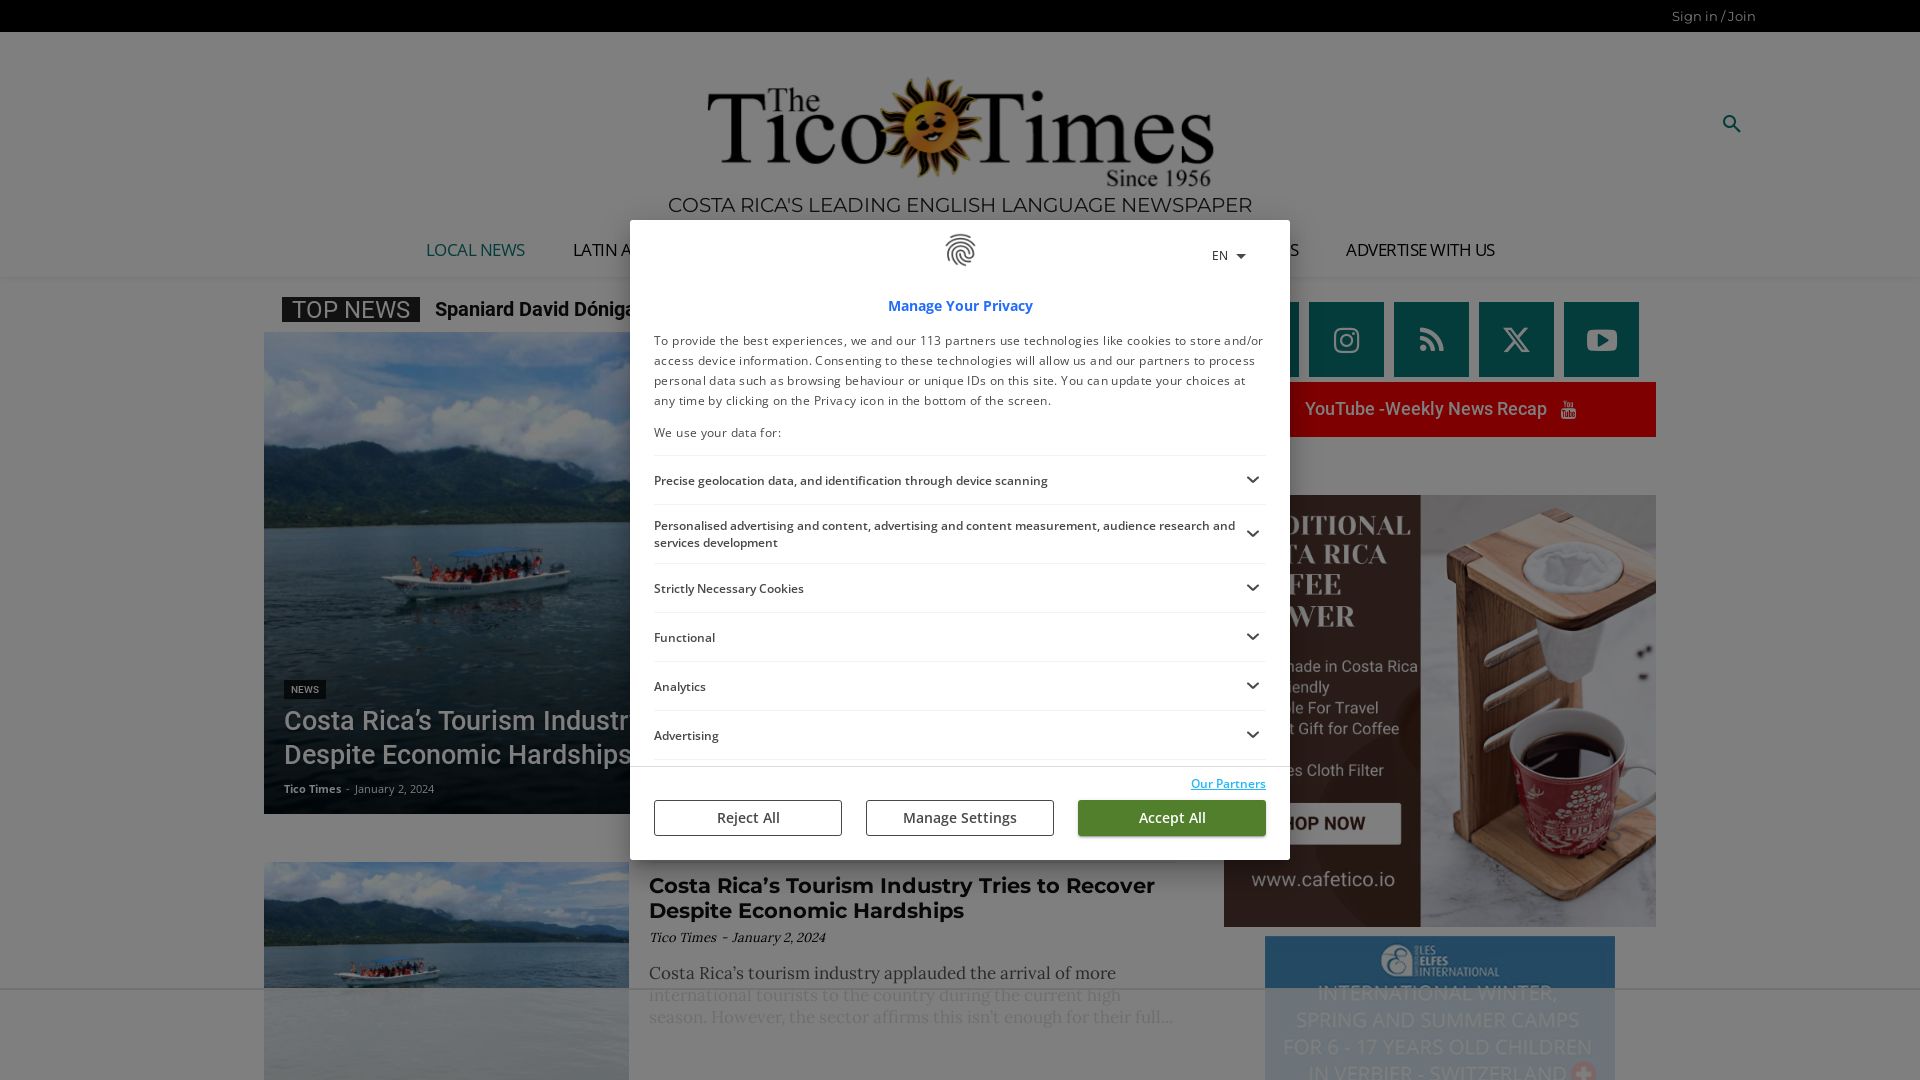 Status do site ticotimes.net está   ONLINE